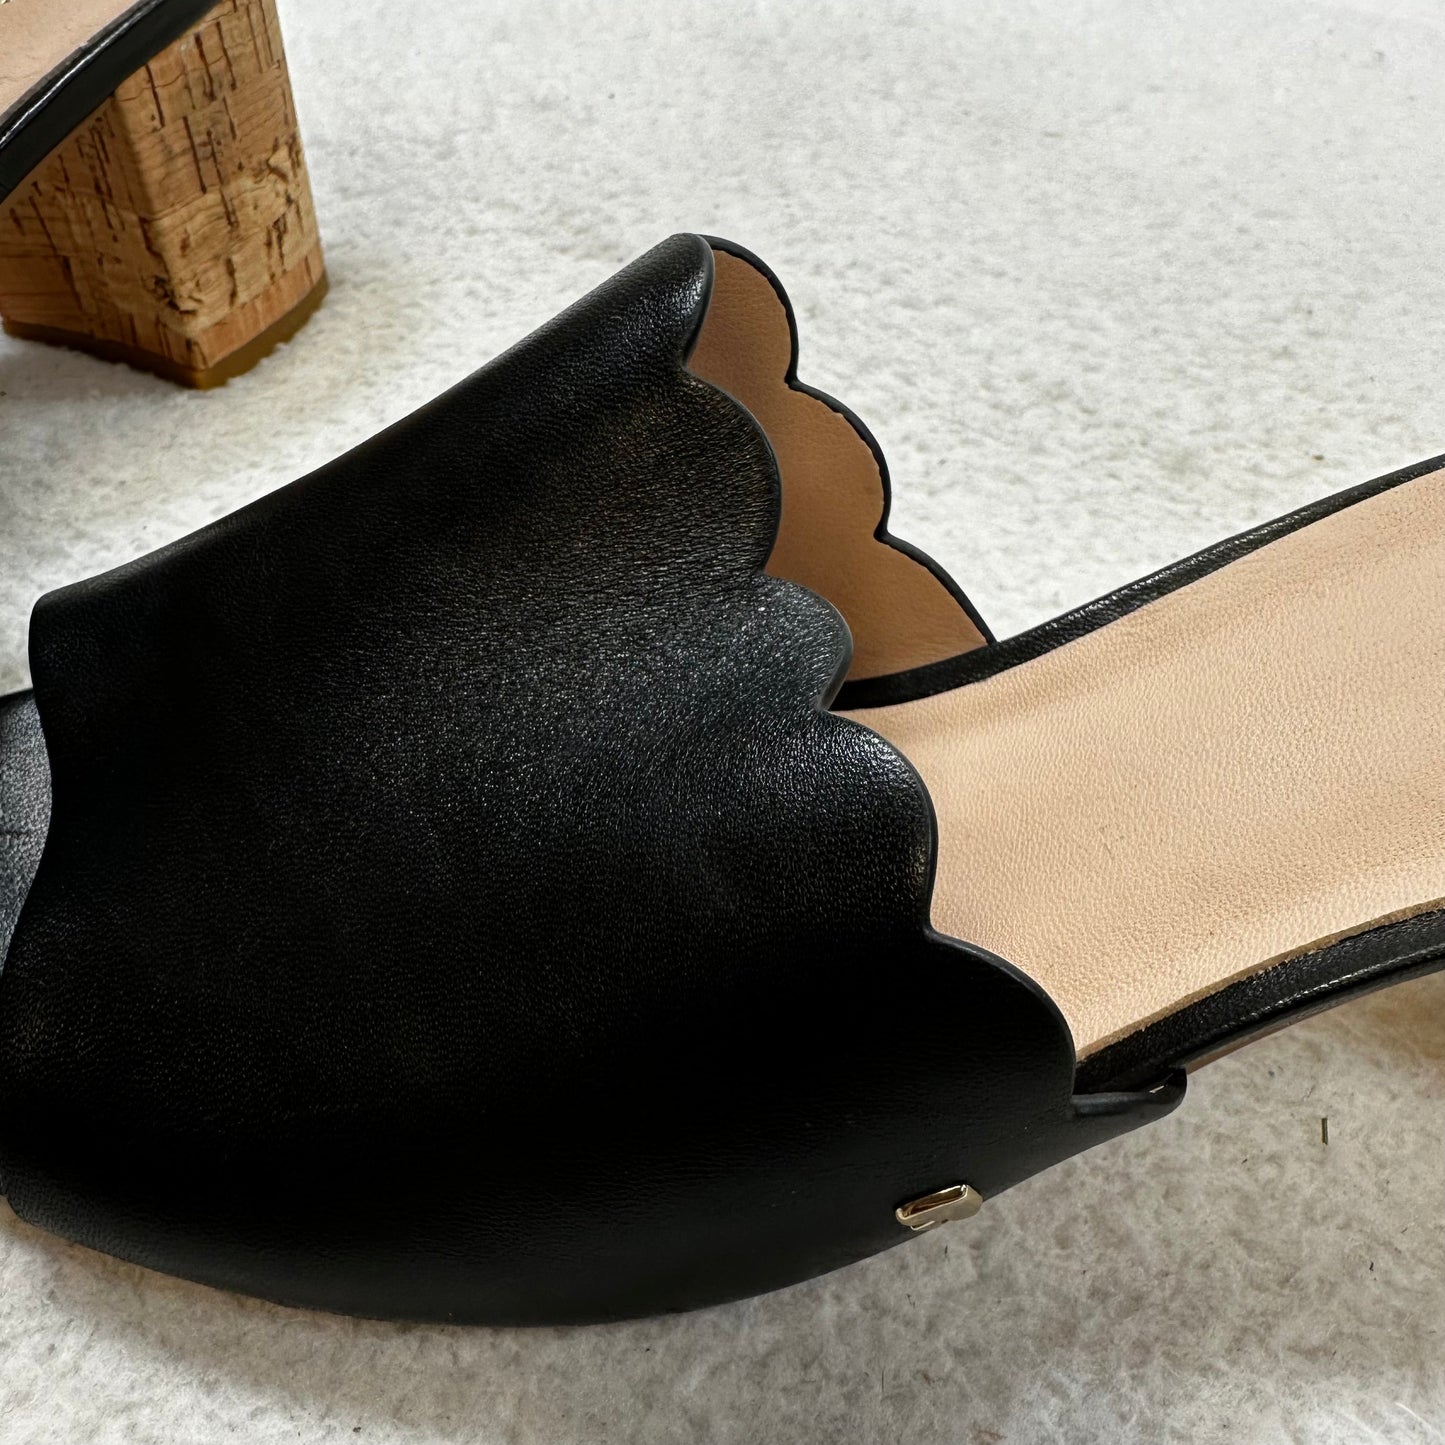 Black Sandals Heels Block Kate Spade, Size 8.5